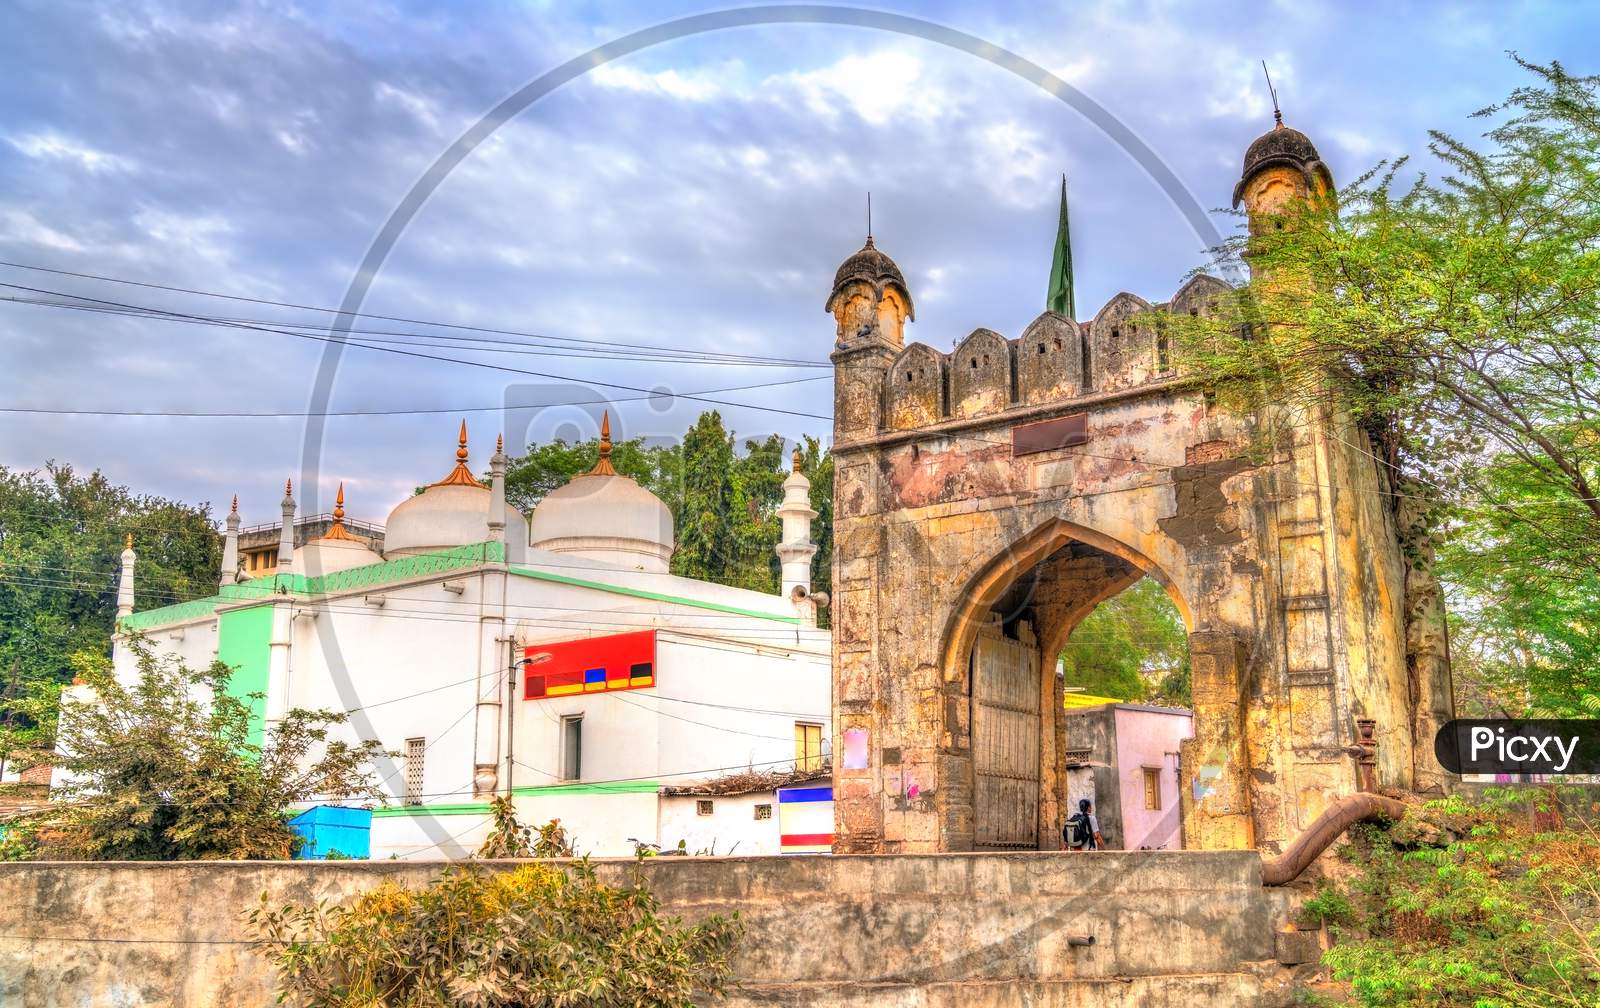 Jamil Baig Masjid Mosque And Mahmud Darwaza Gate In Aurangabad, India